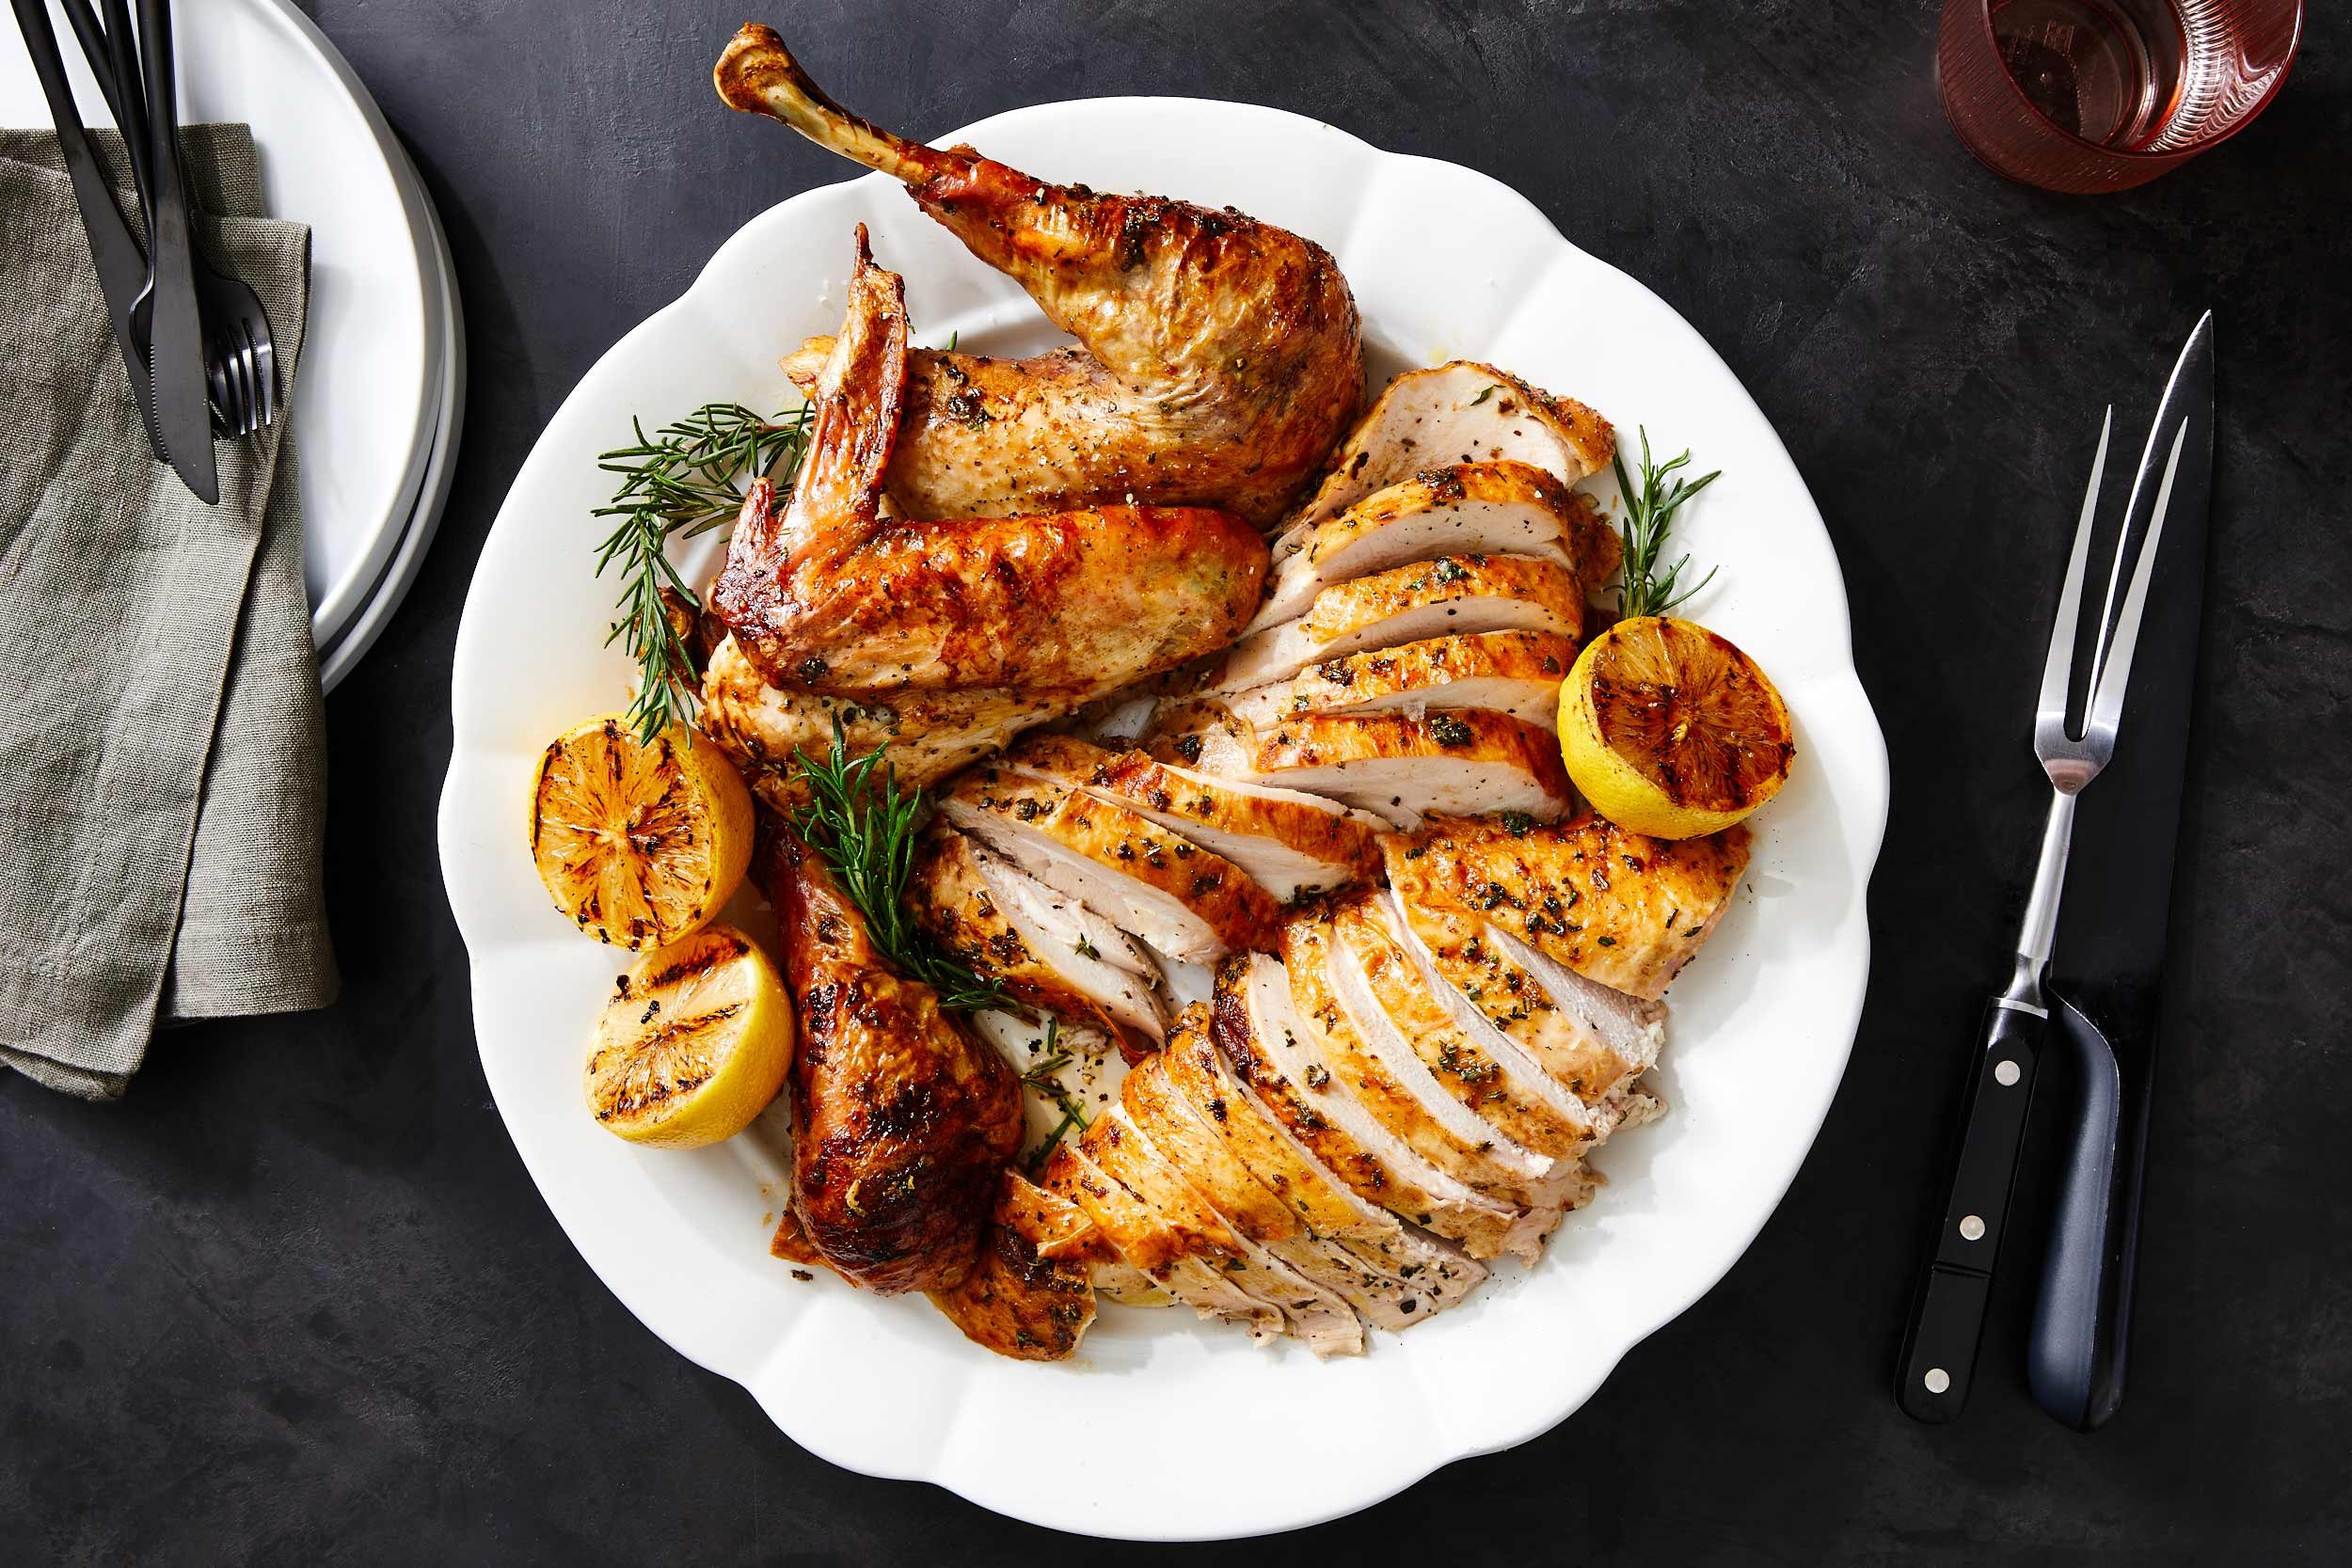 nyc-nj-food-editorial-photographer-grilled-turkey.jpg